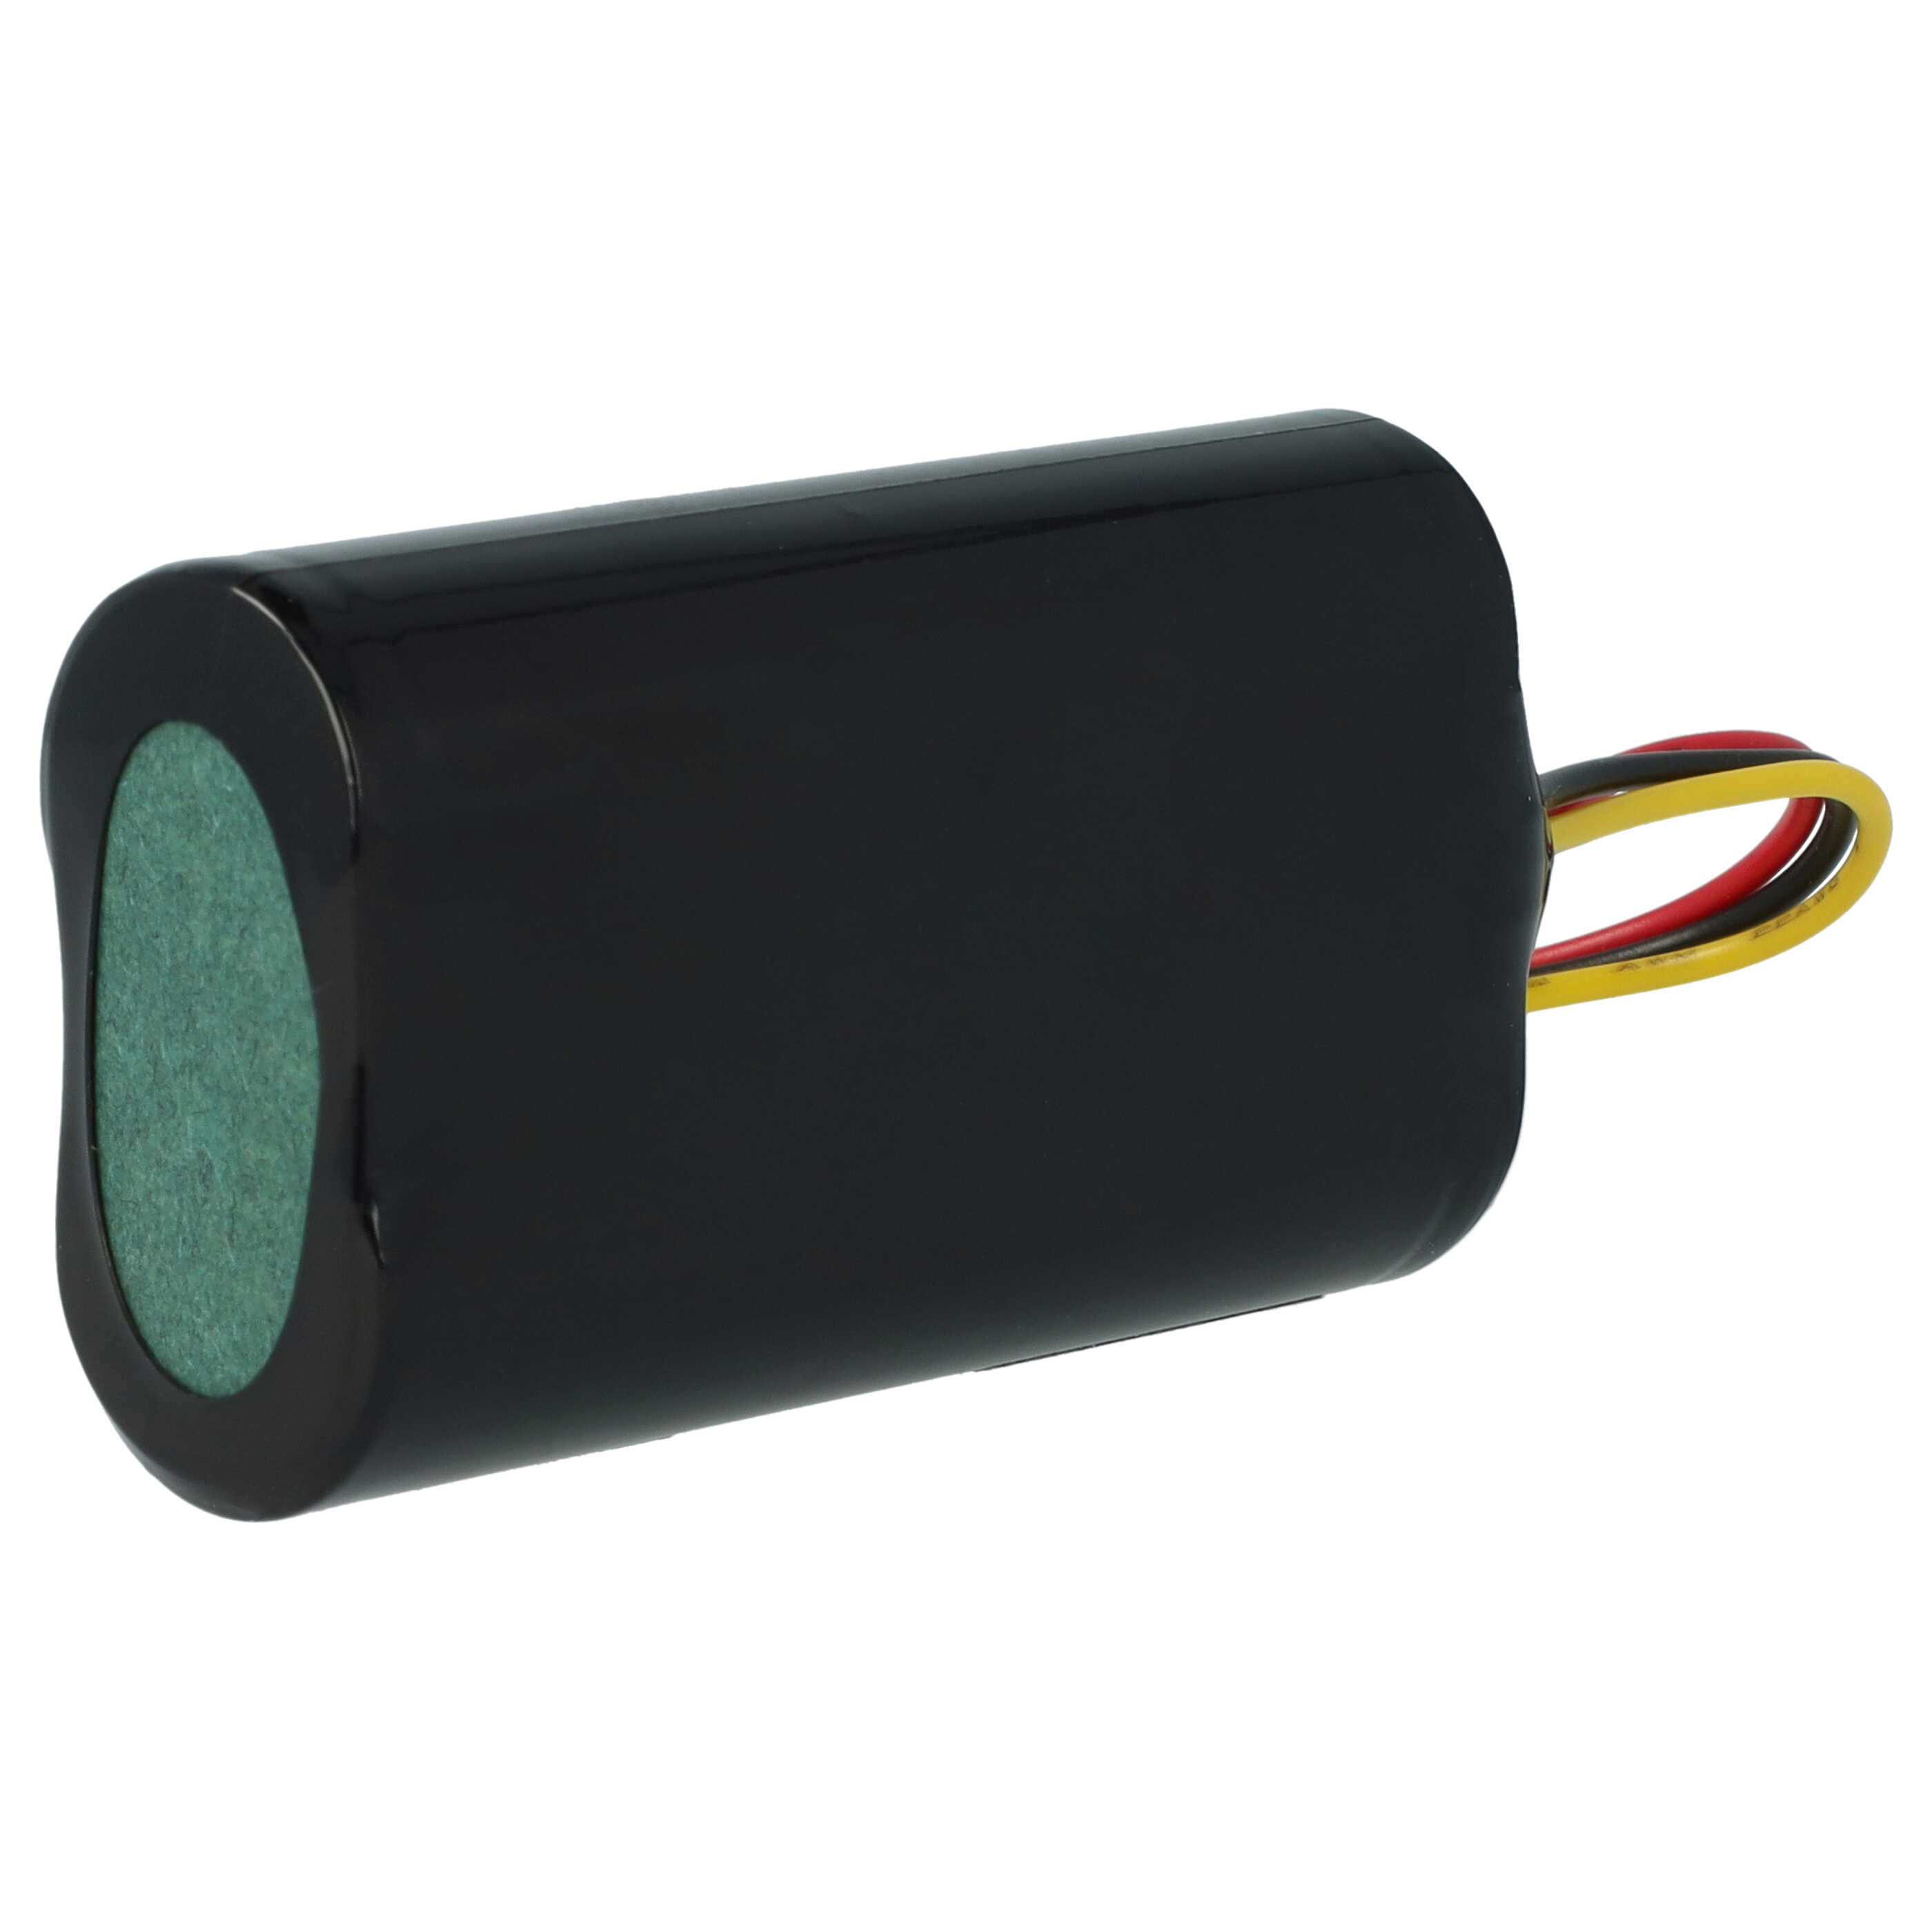 Akumulator do lokalizatora odbiornika GPS zamiennik Topcon 1000001-01 - 2600 mAh 7,4 V Li-Ion